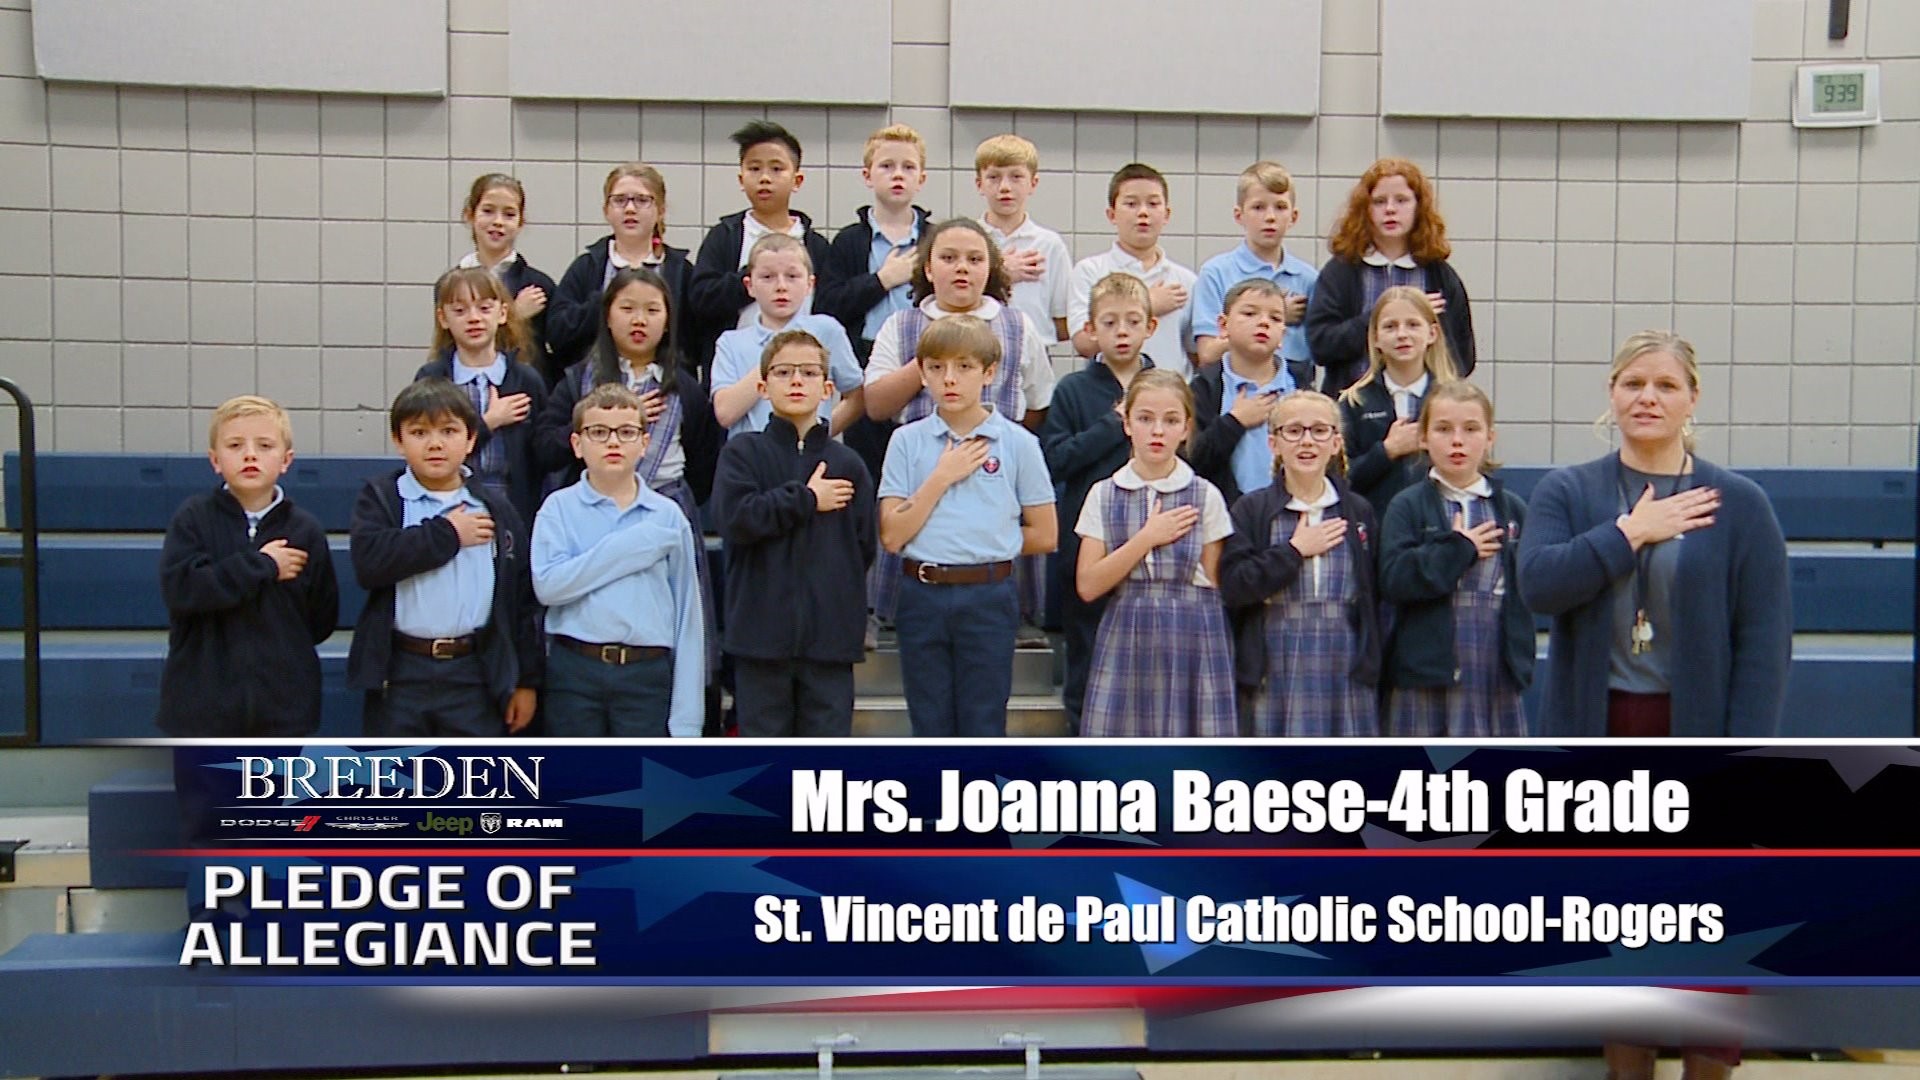 Mrs. Joanna Baese  4th Grade St. Vincent de Paul Catholic School, Rogers